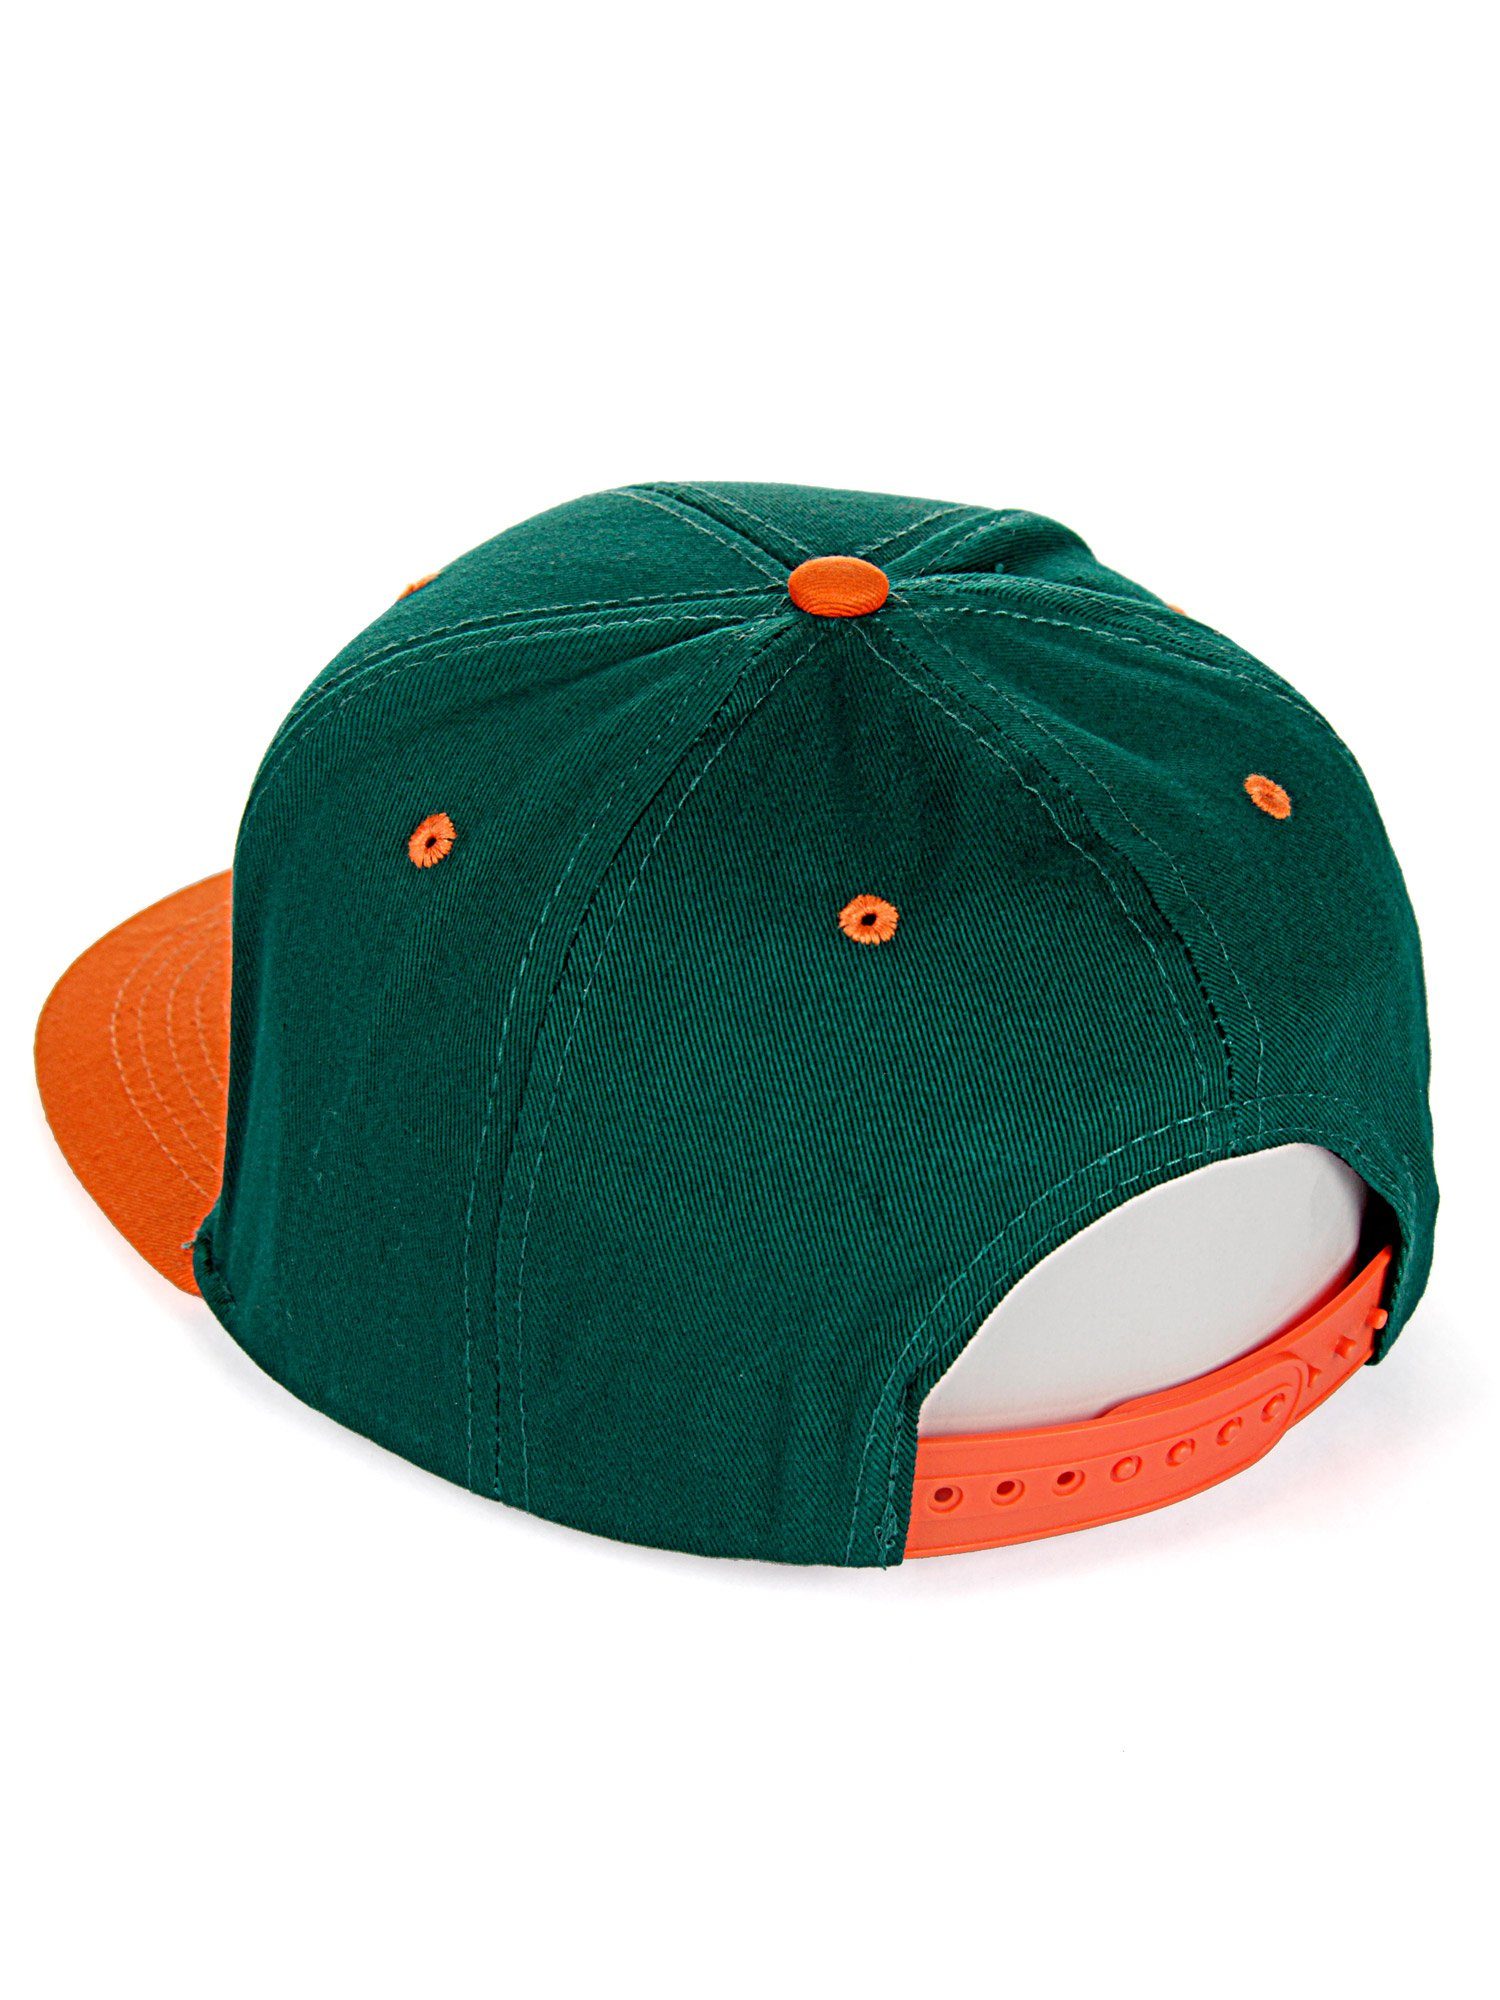 Cap Baseball kontrastfarbigem Schirm RedBridge Sittingbourne grün-orange mit